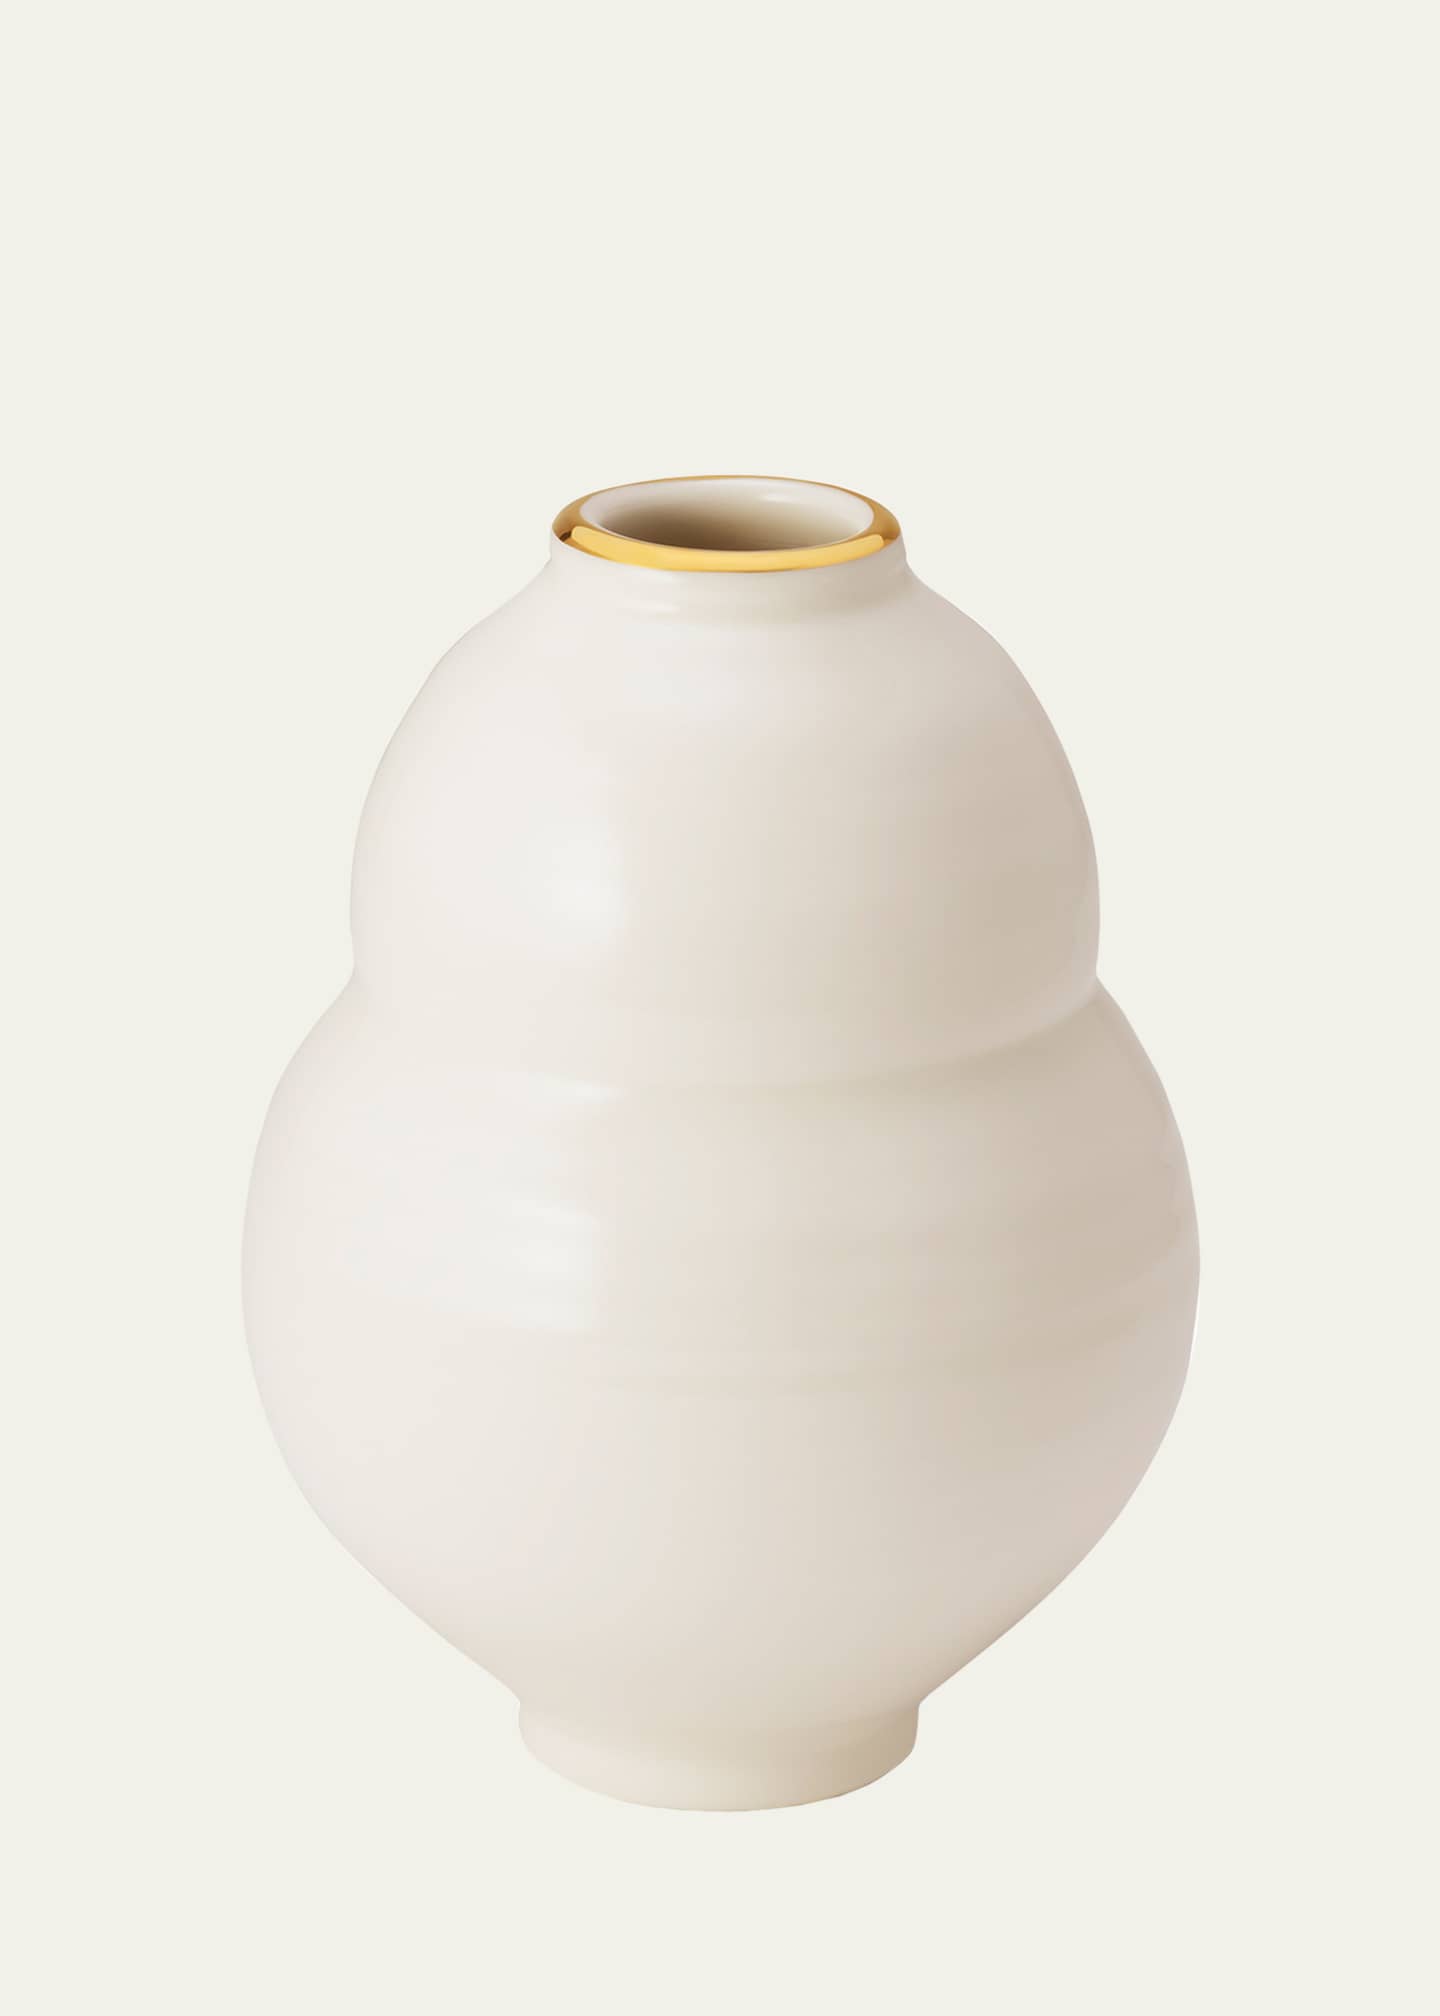 AERIN Sancia Gourd Vase Image 1 of 4